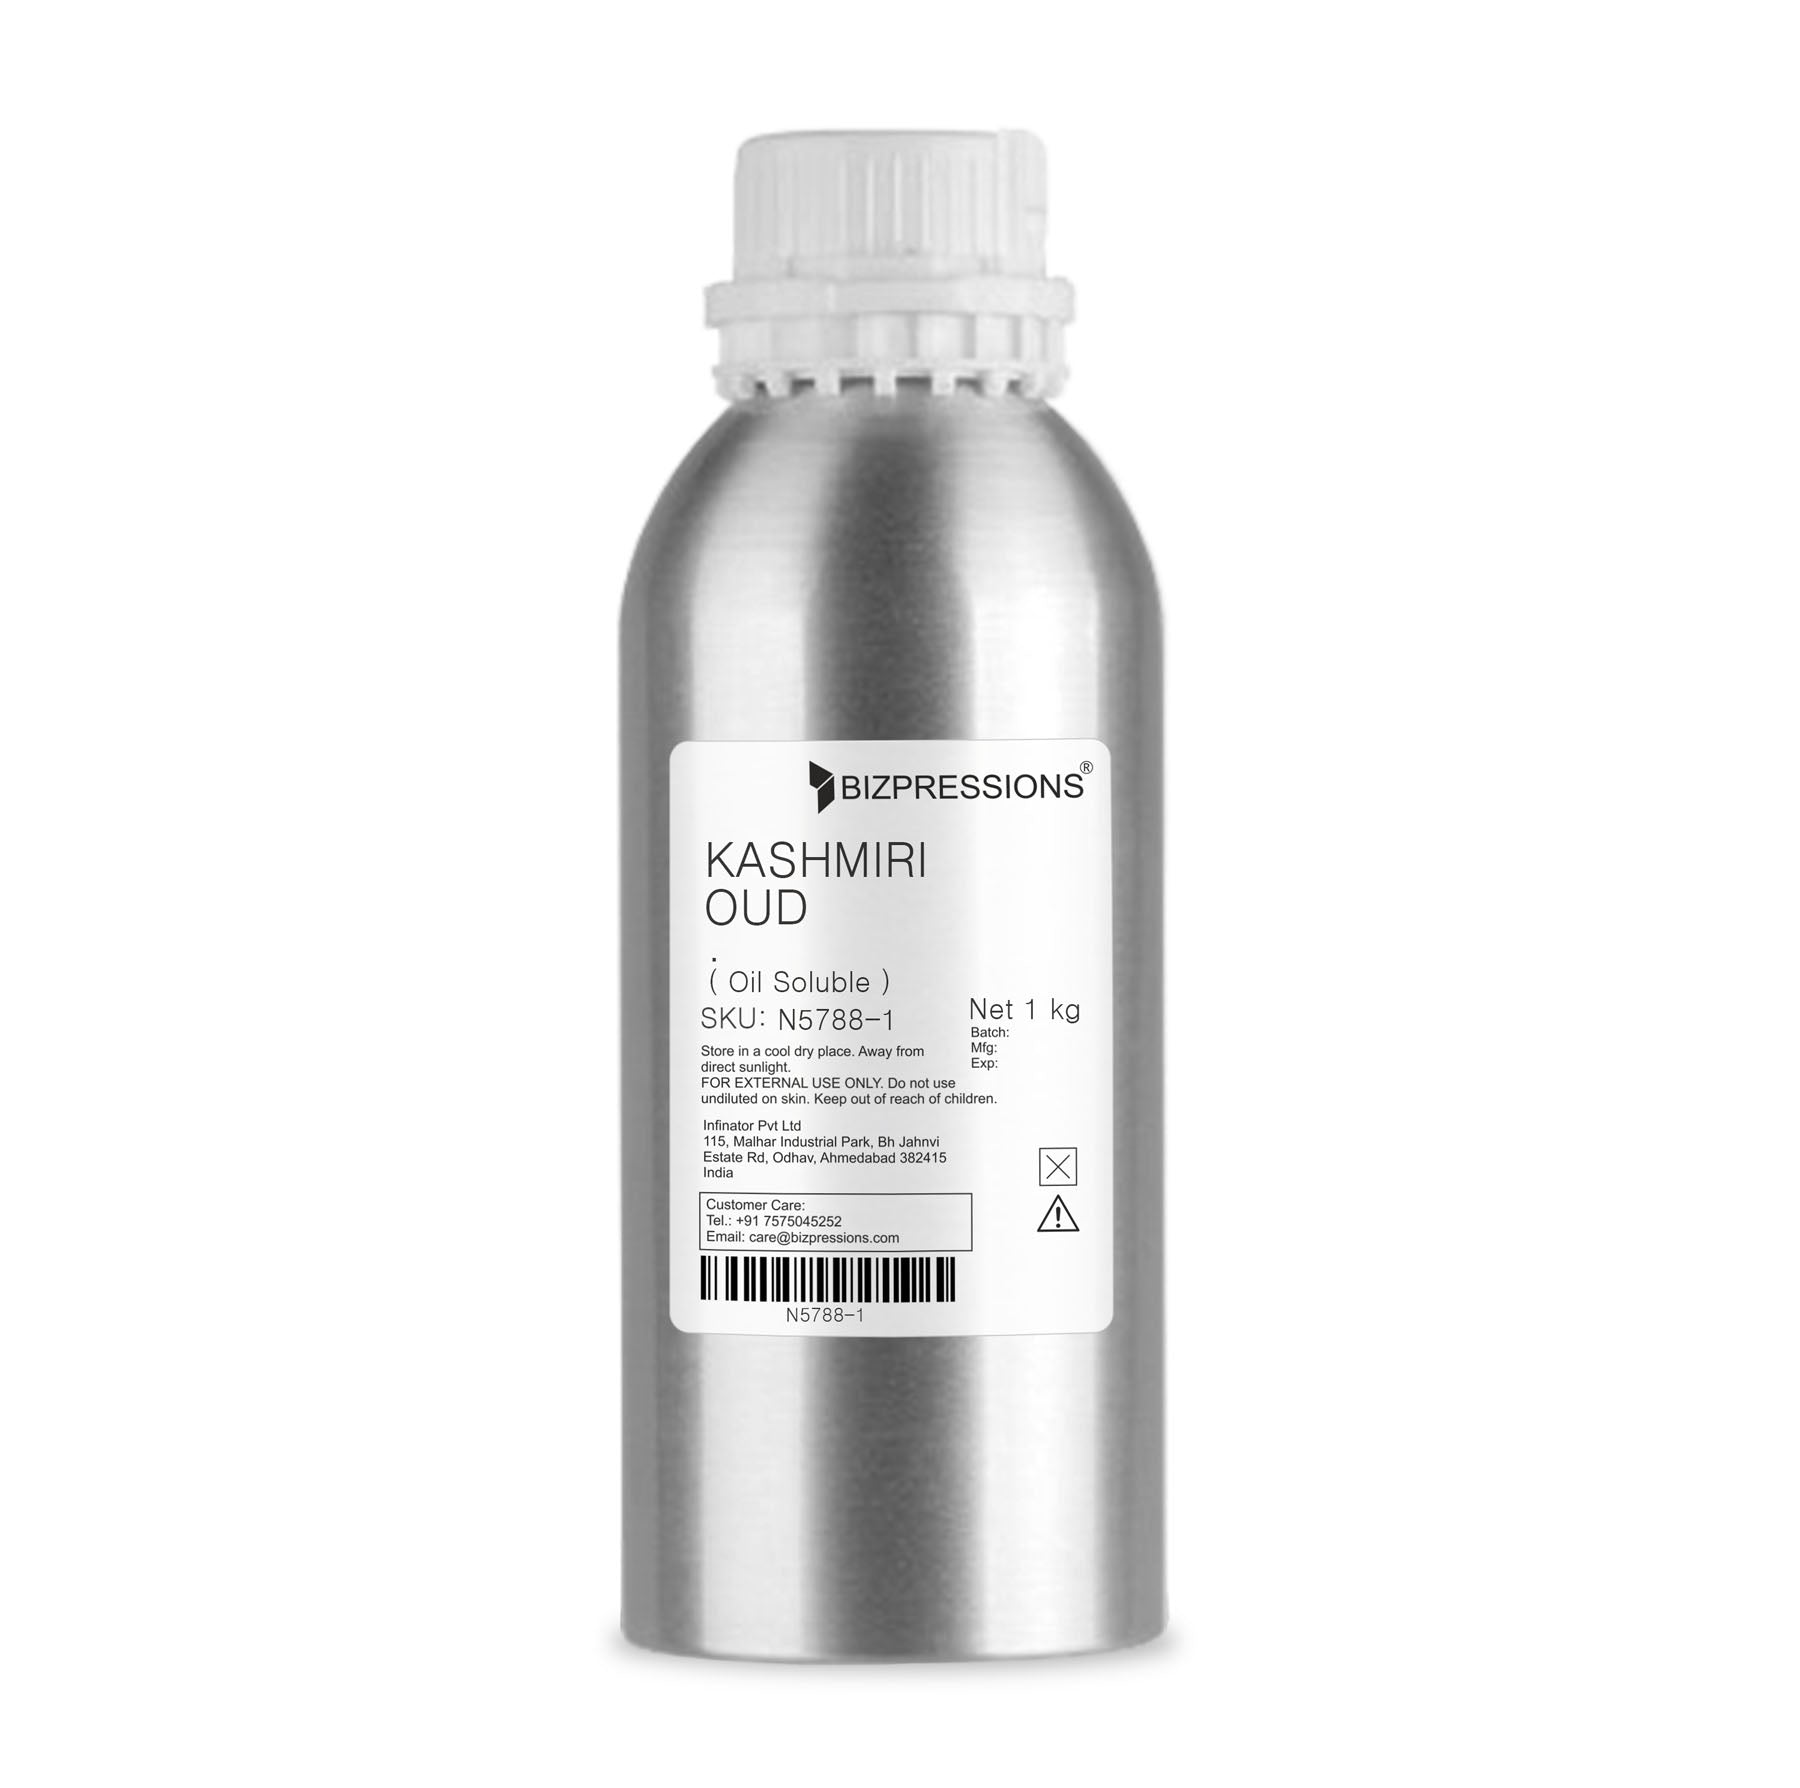 KASHMIRI OUD - Fragrance ( Oil Soluble ) - 1 kg